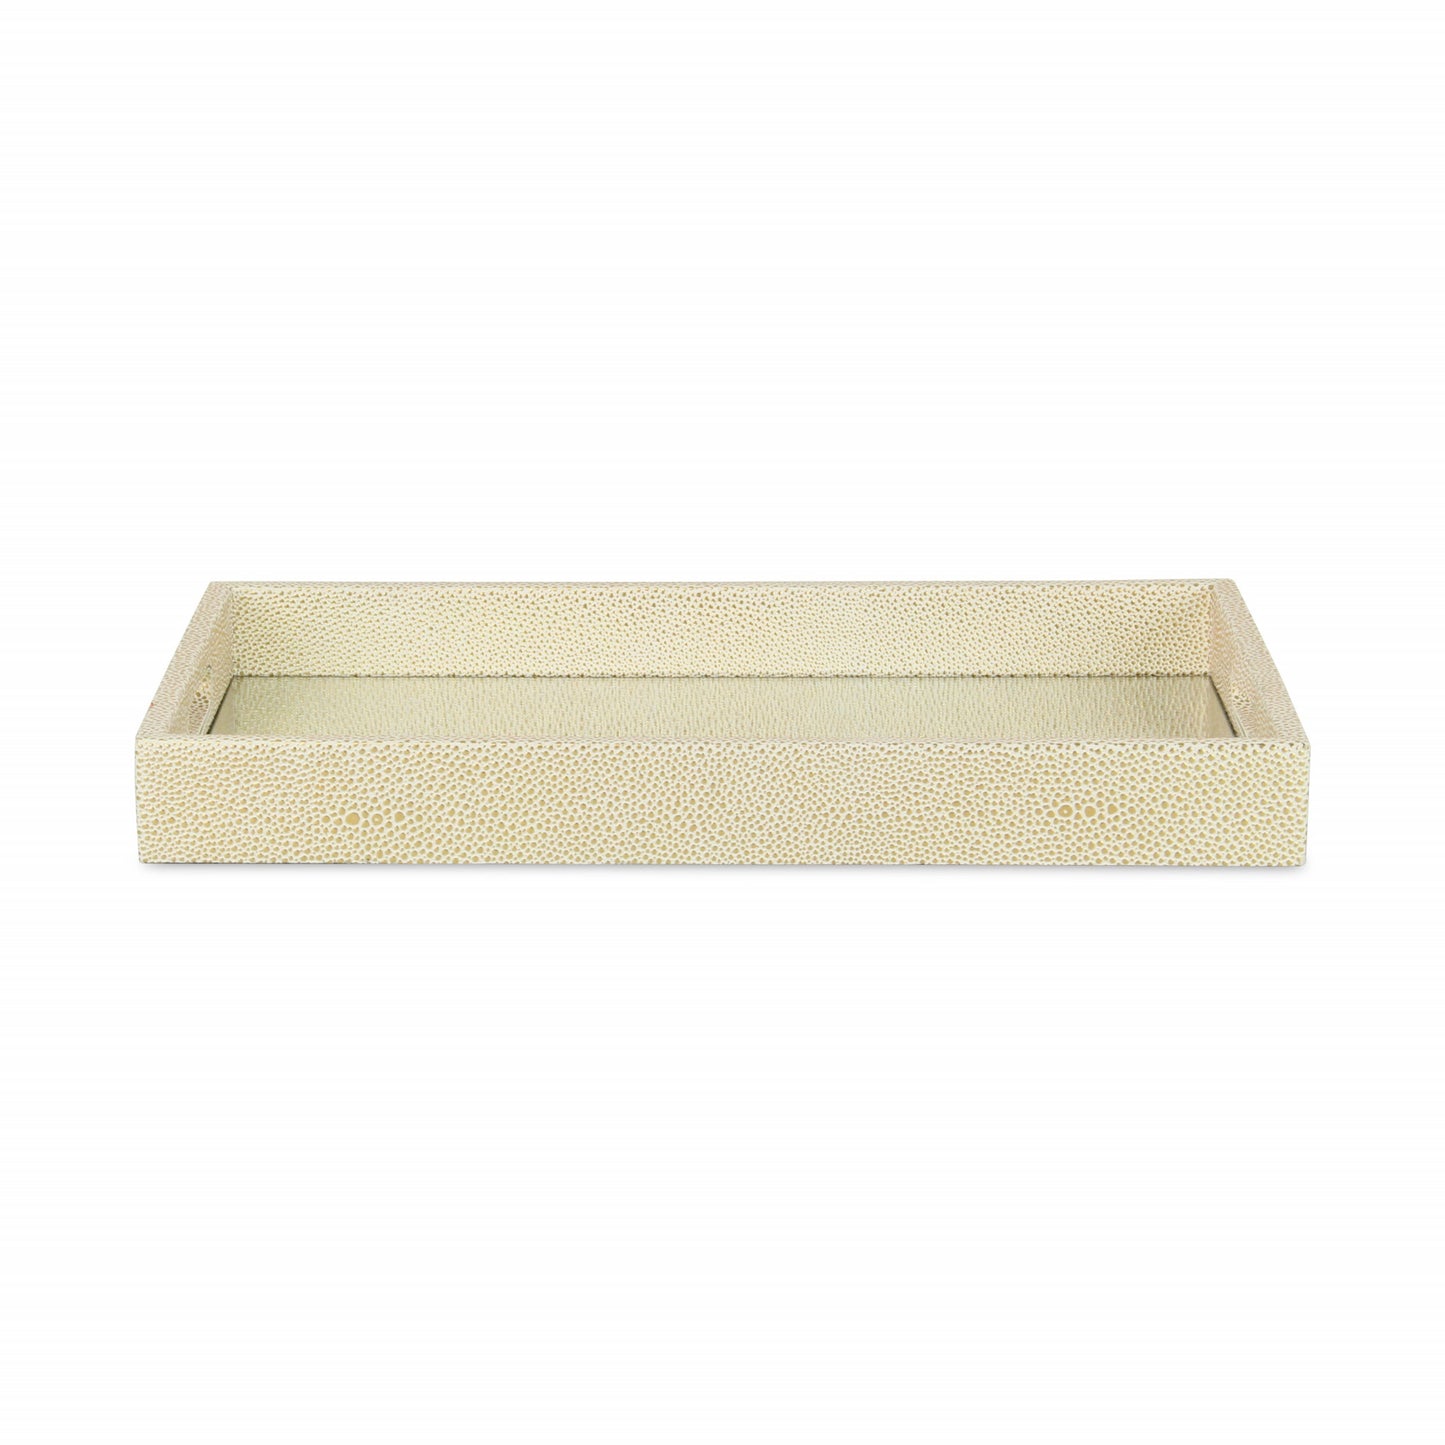 16" White Gold Rectangular Wood Handmade Tray With Handles